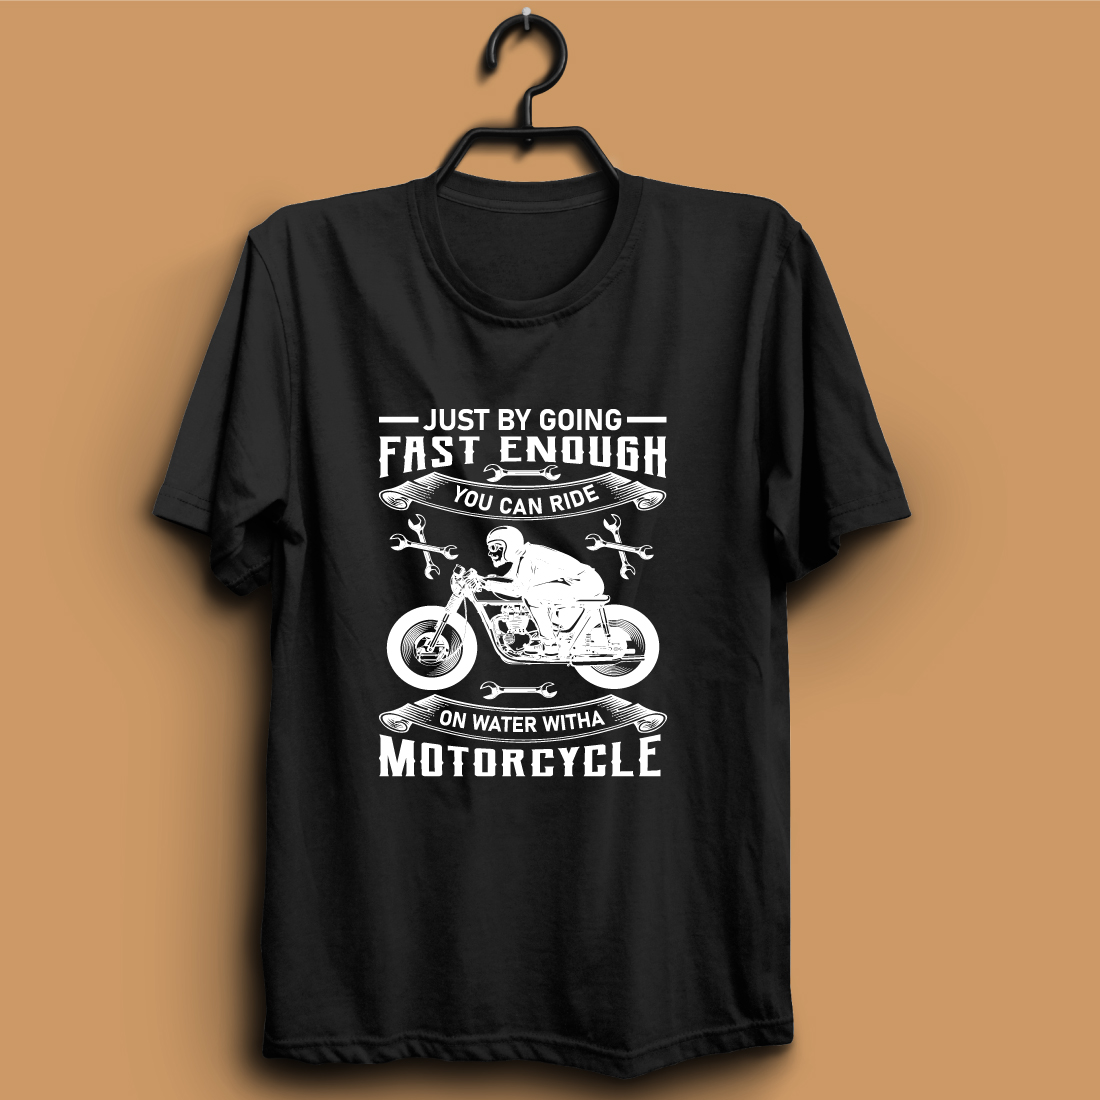 vintage motorcycle t shirt design02 570